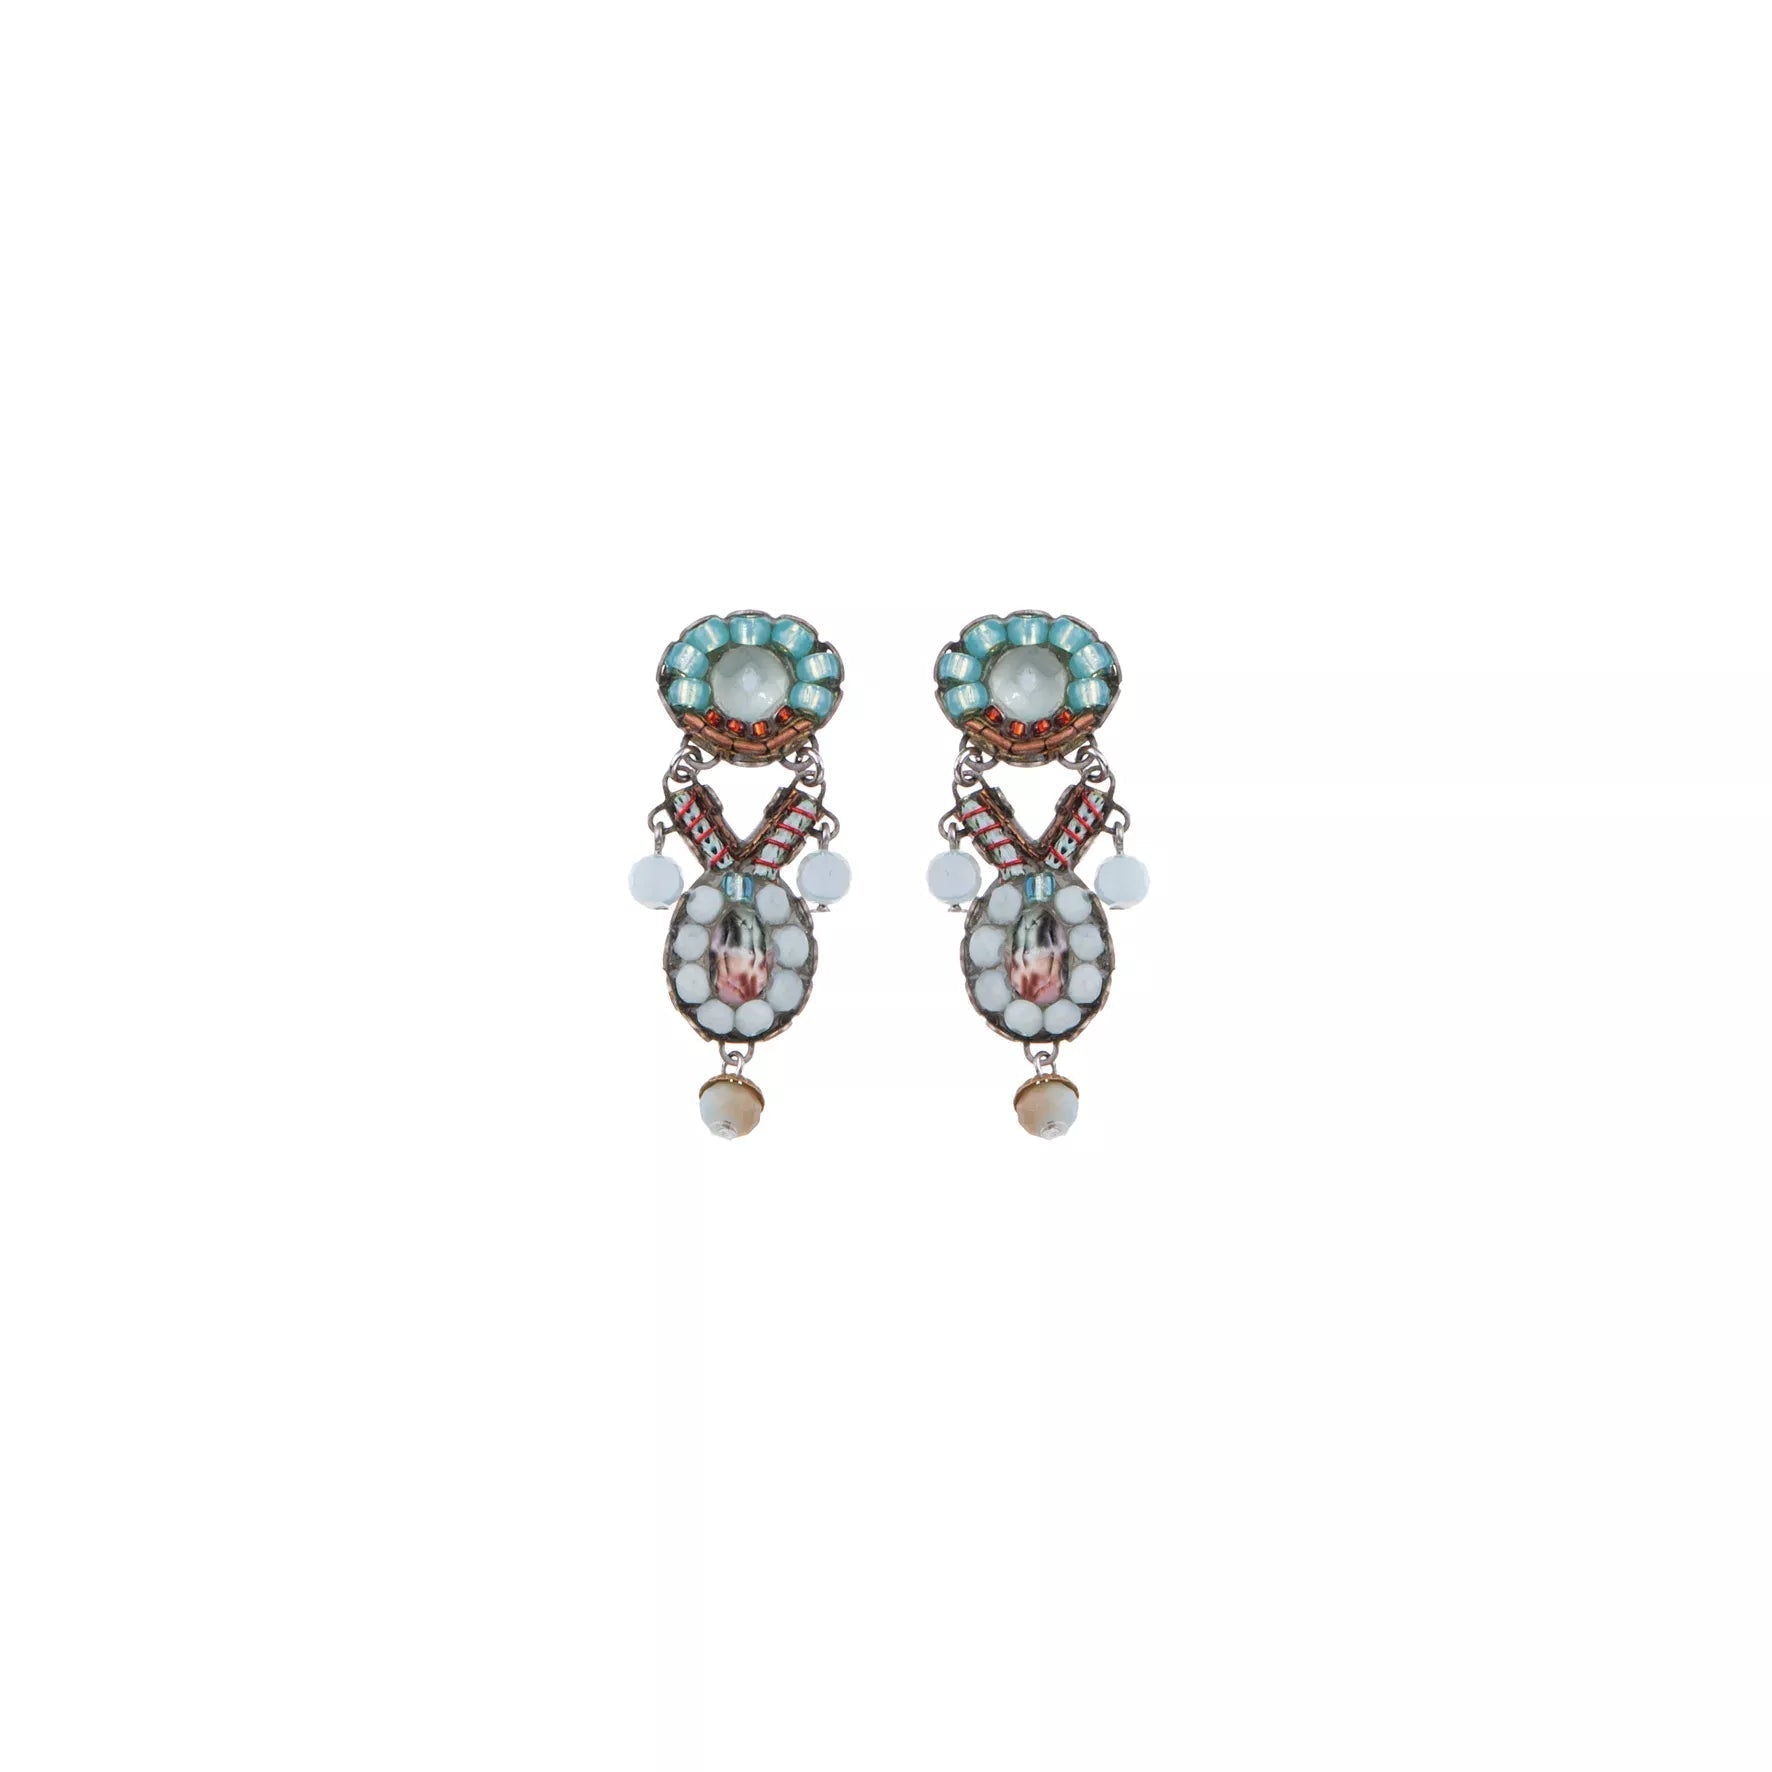 Mint Flavour Ayla Earrings - The Nancy Smillie Shop - Art, Jewellery & Designer Gifts Glasgow